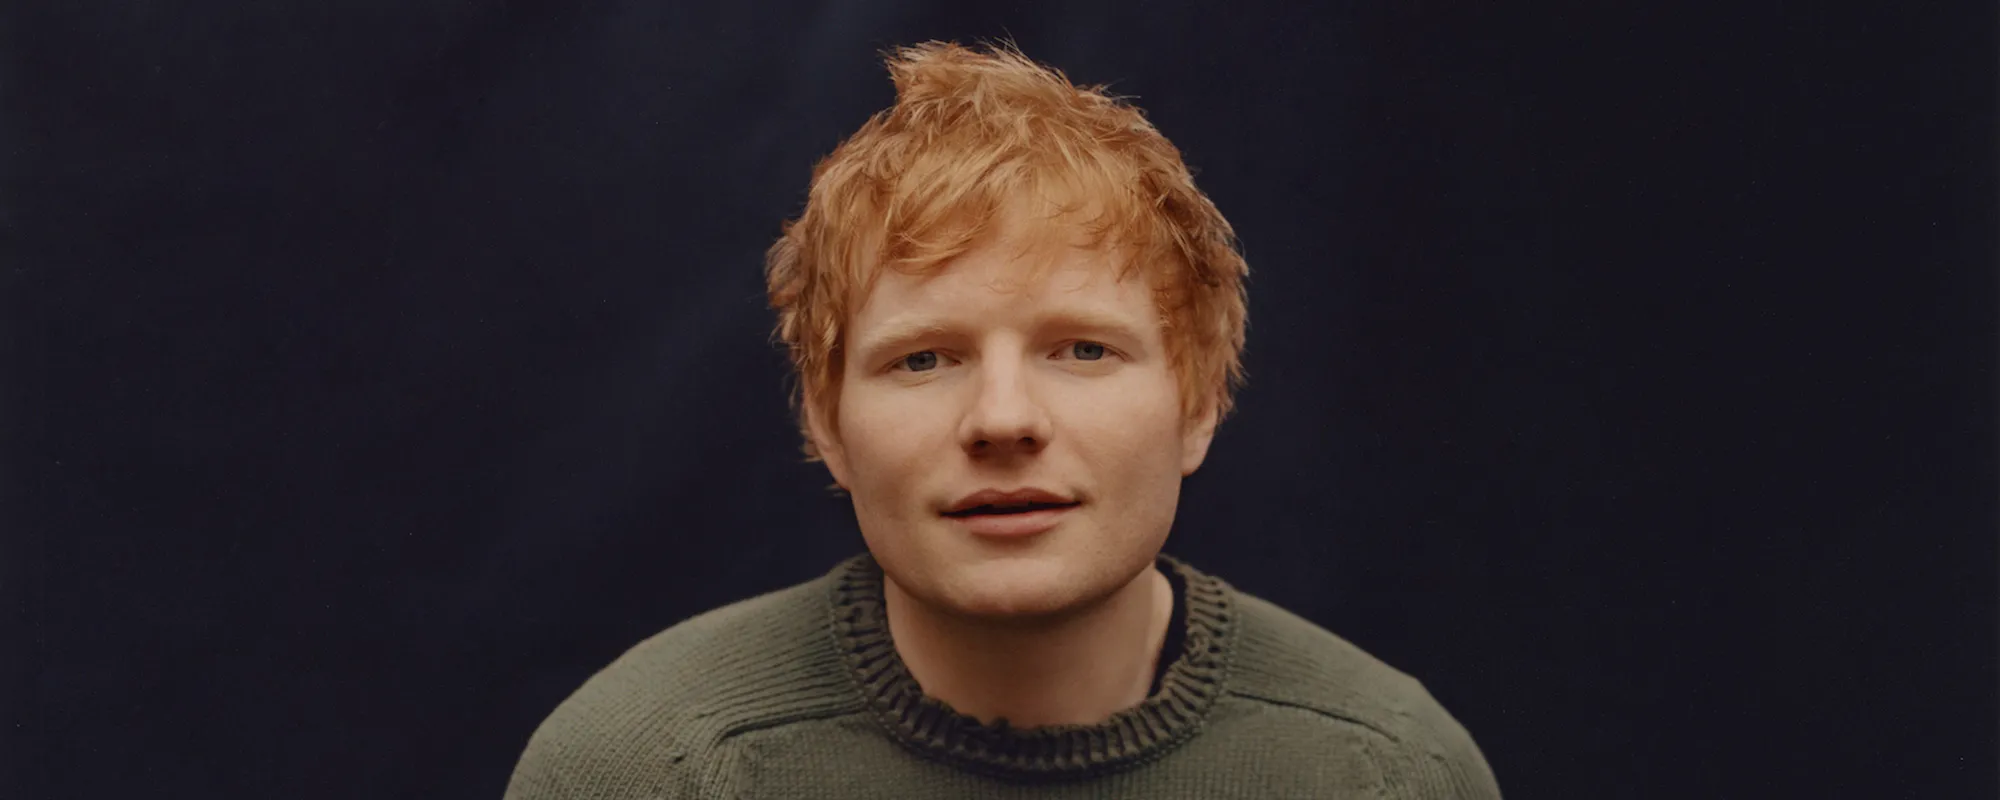 Ed Sheeran Awarded $1.1 Million Over “Shape of You” Copyright Lawsuit